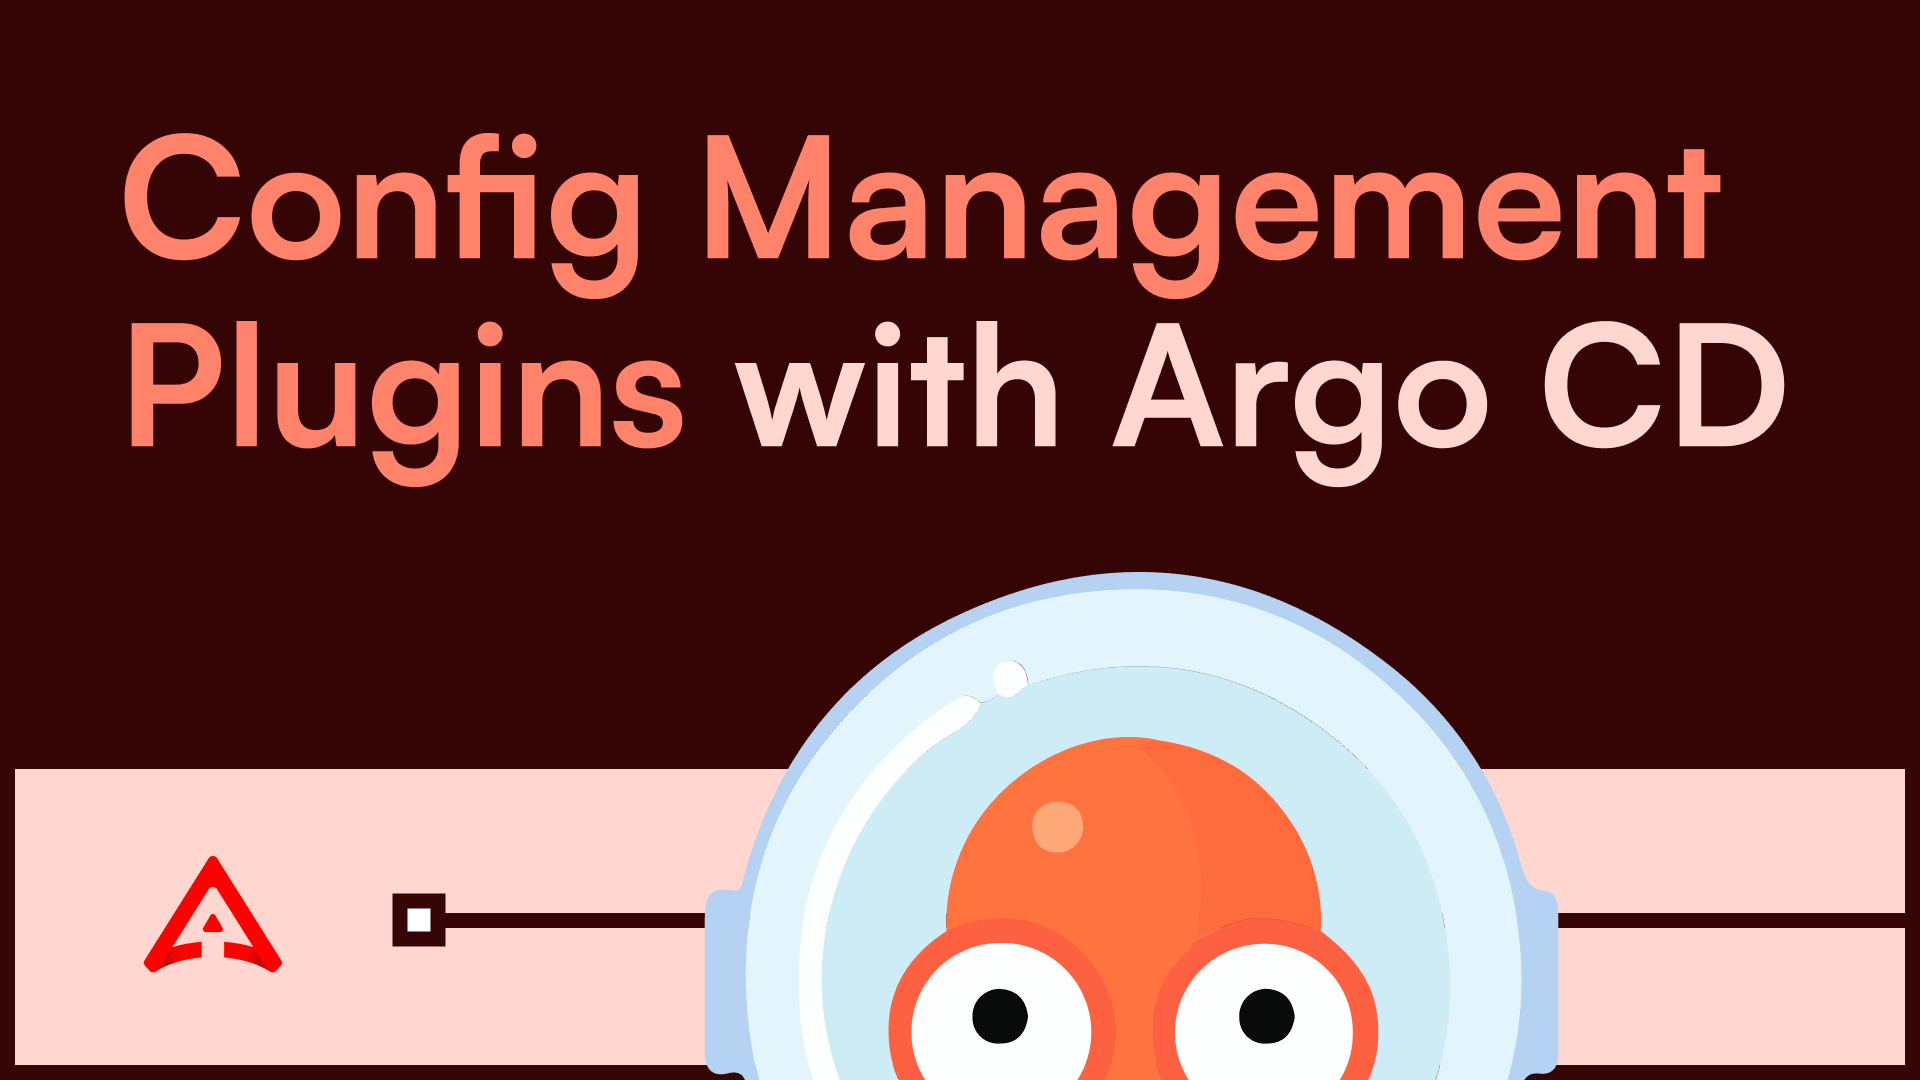 Config Management Plugins with Argo CD blog cover image